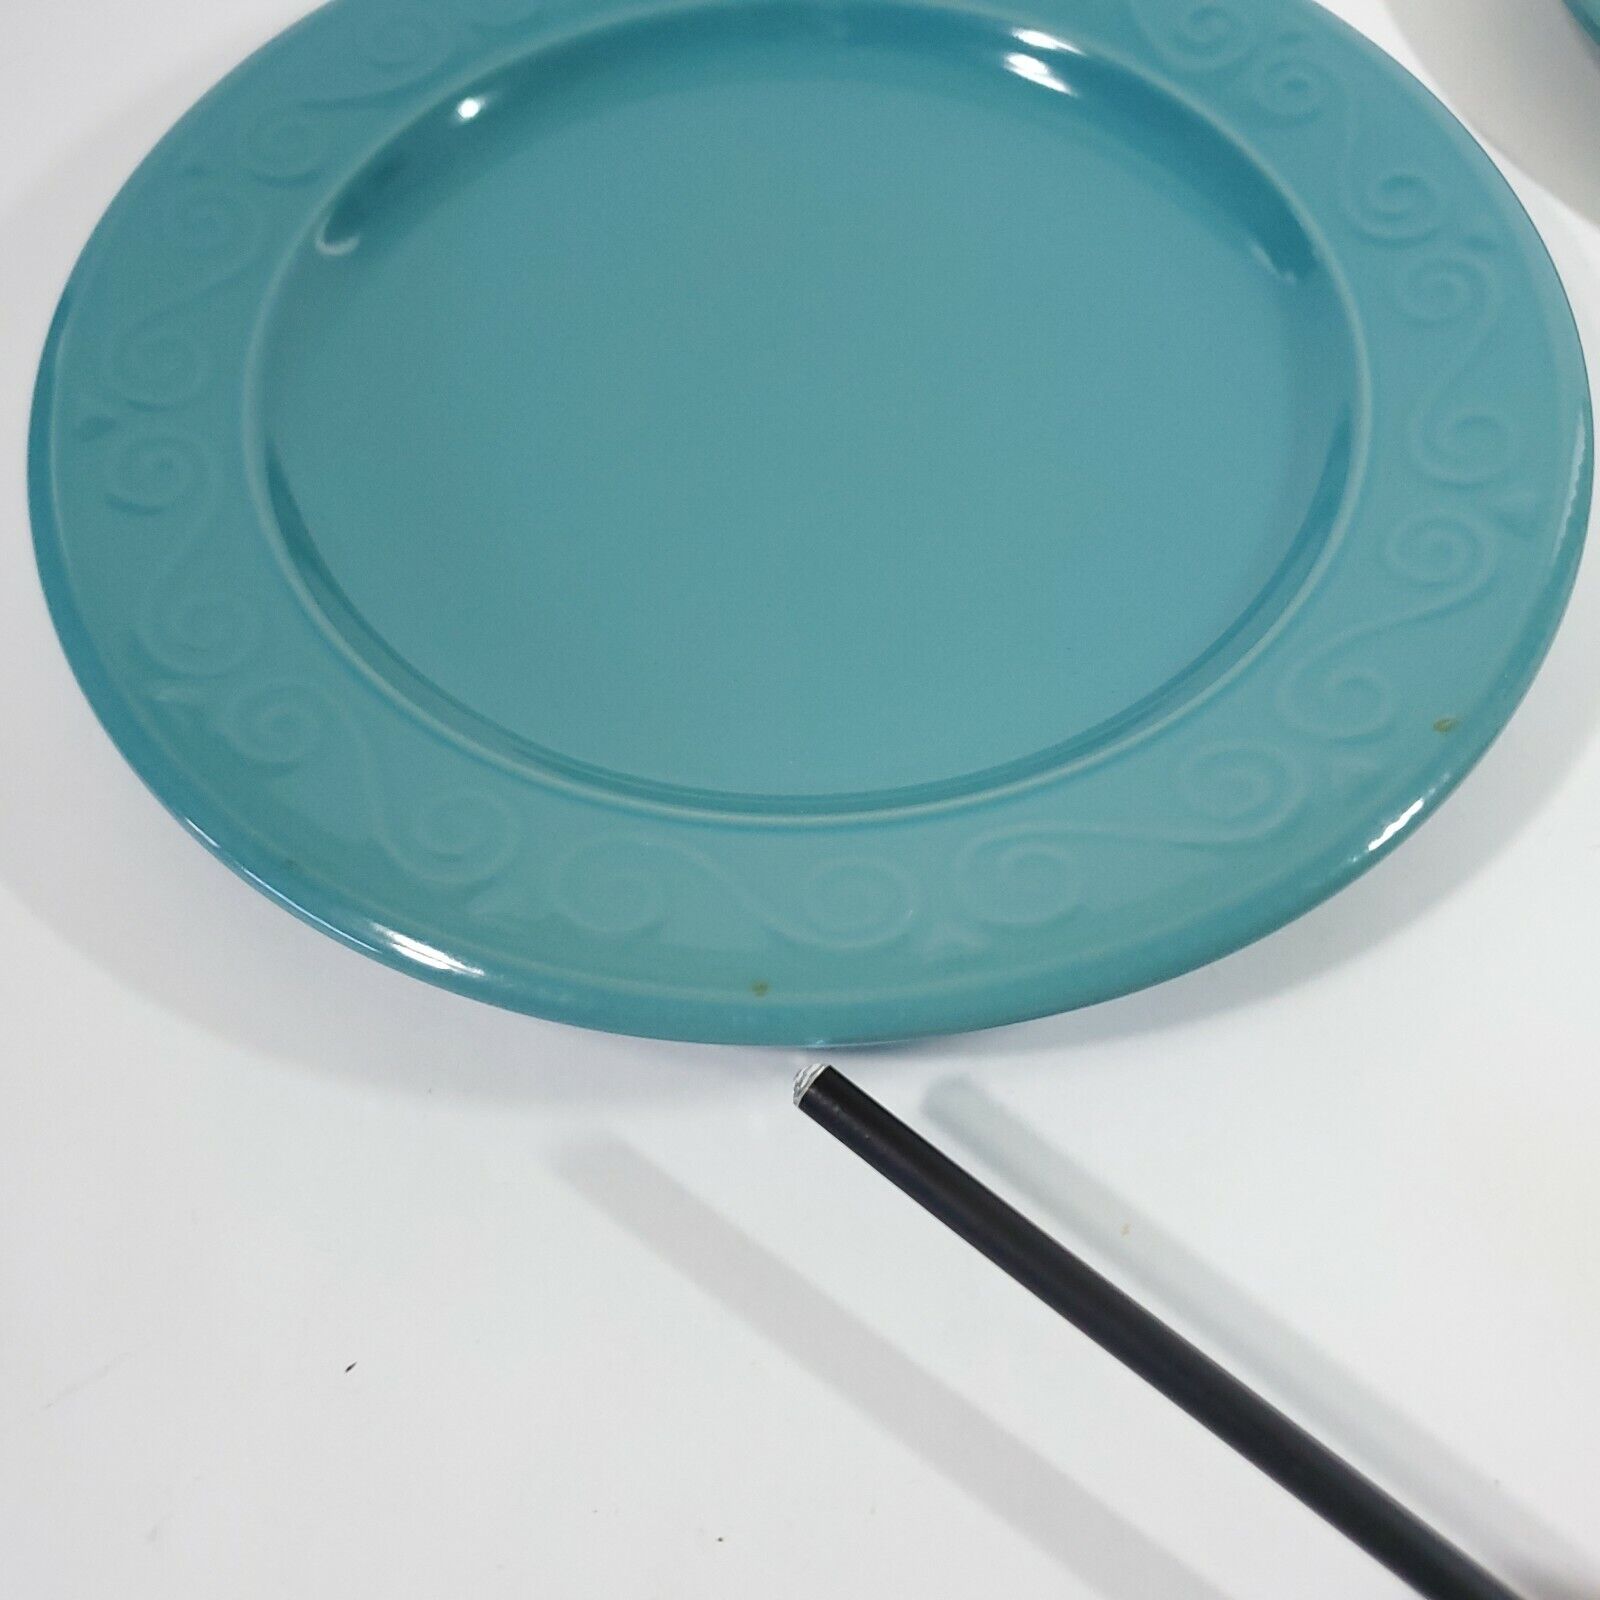 x2 Royal Norfolk Turquoise Embossed Scrolls 10.25in Dinner Plates Blue Teal Aqua Royal Norfolk - фотография #8